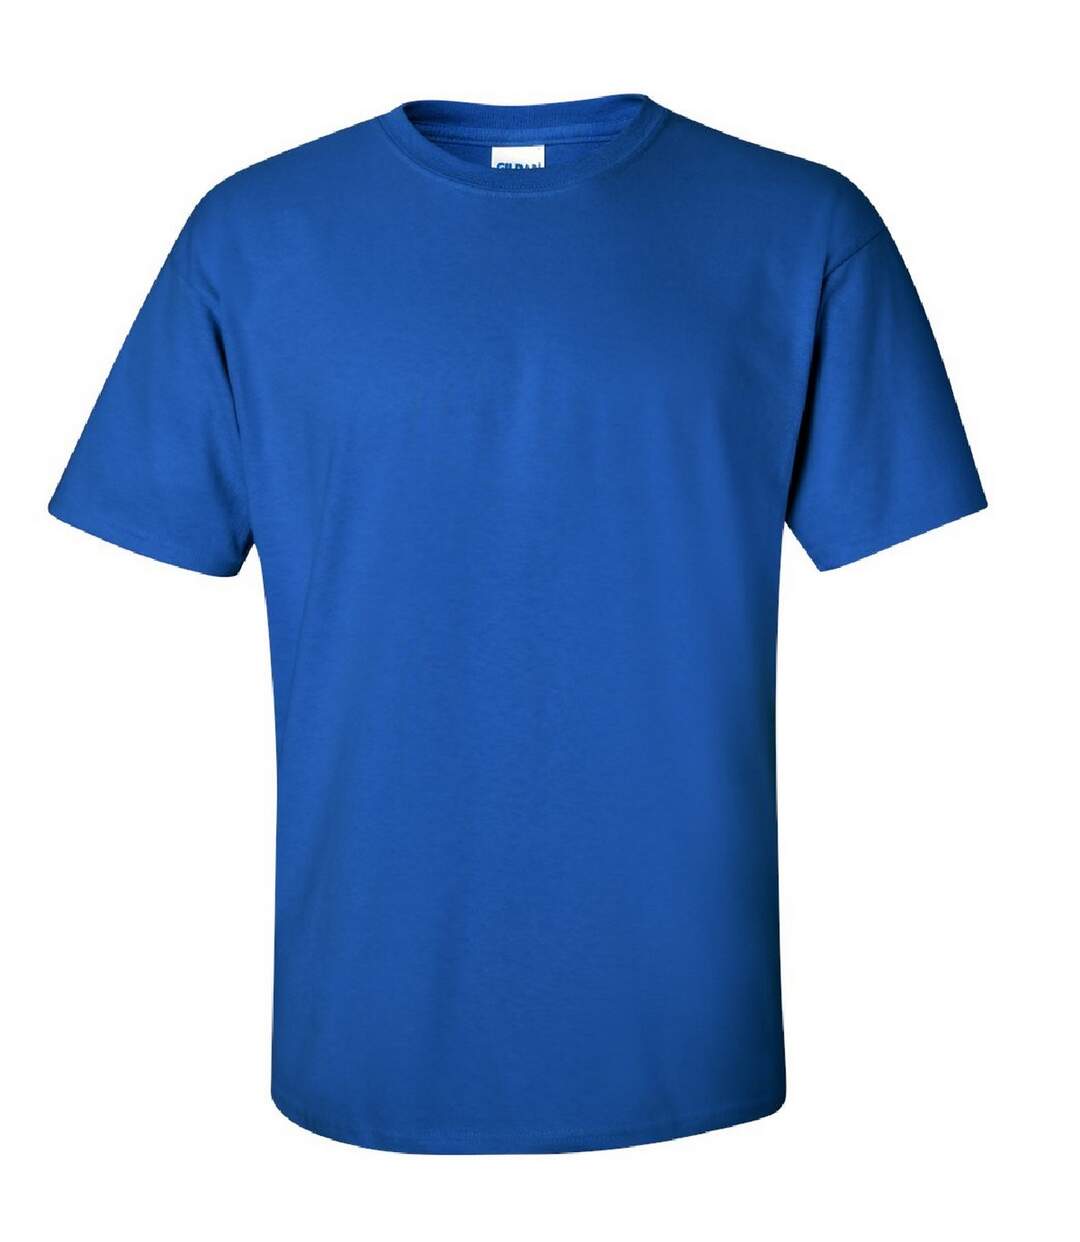 Gildan Mens Ultra Cotton Short Sleeve T-Shirt (Royal)